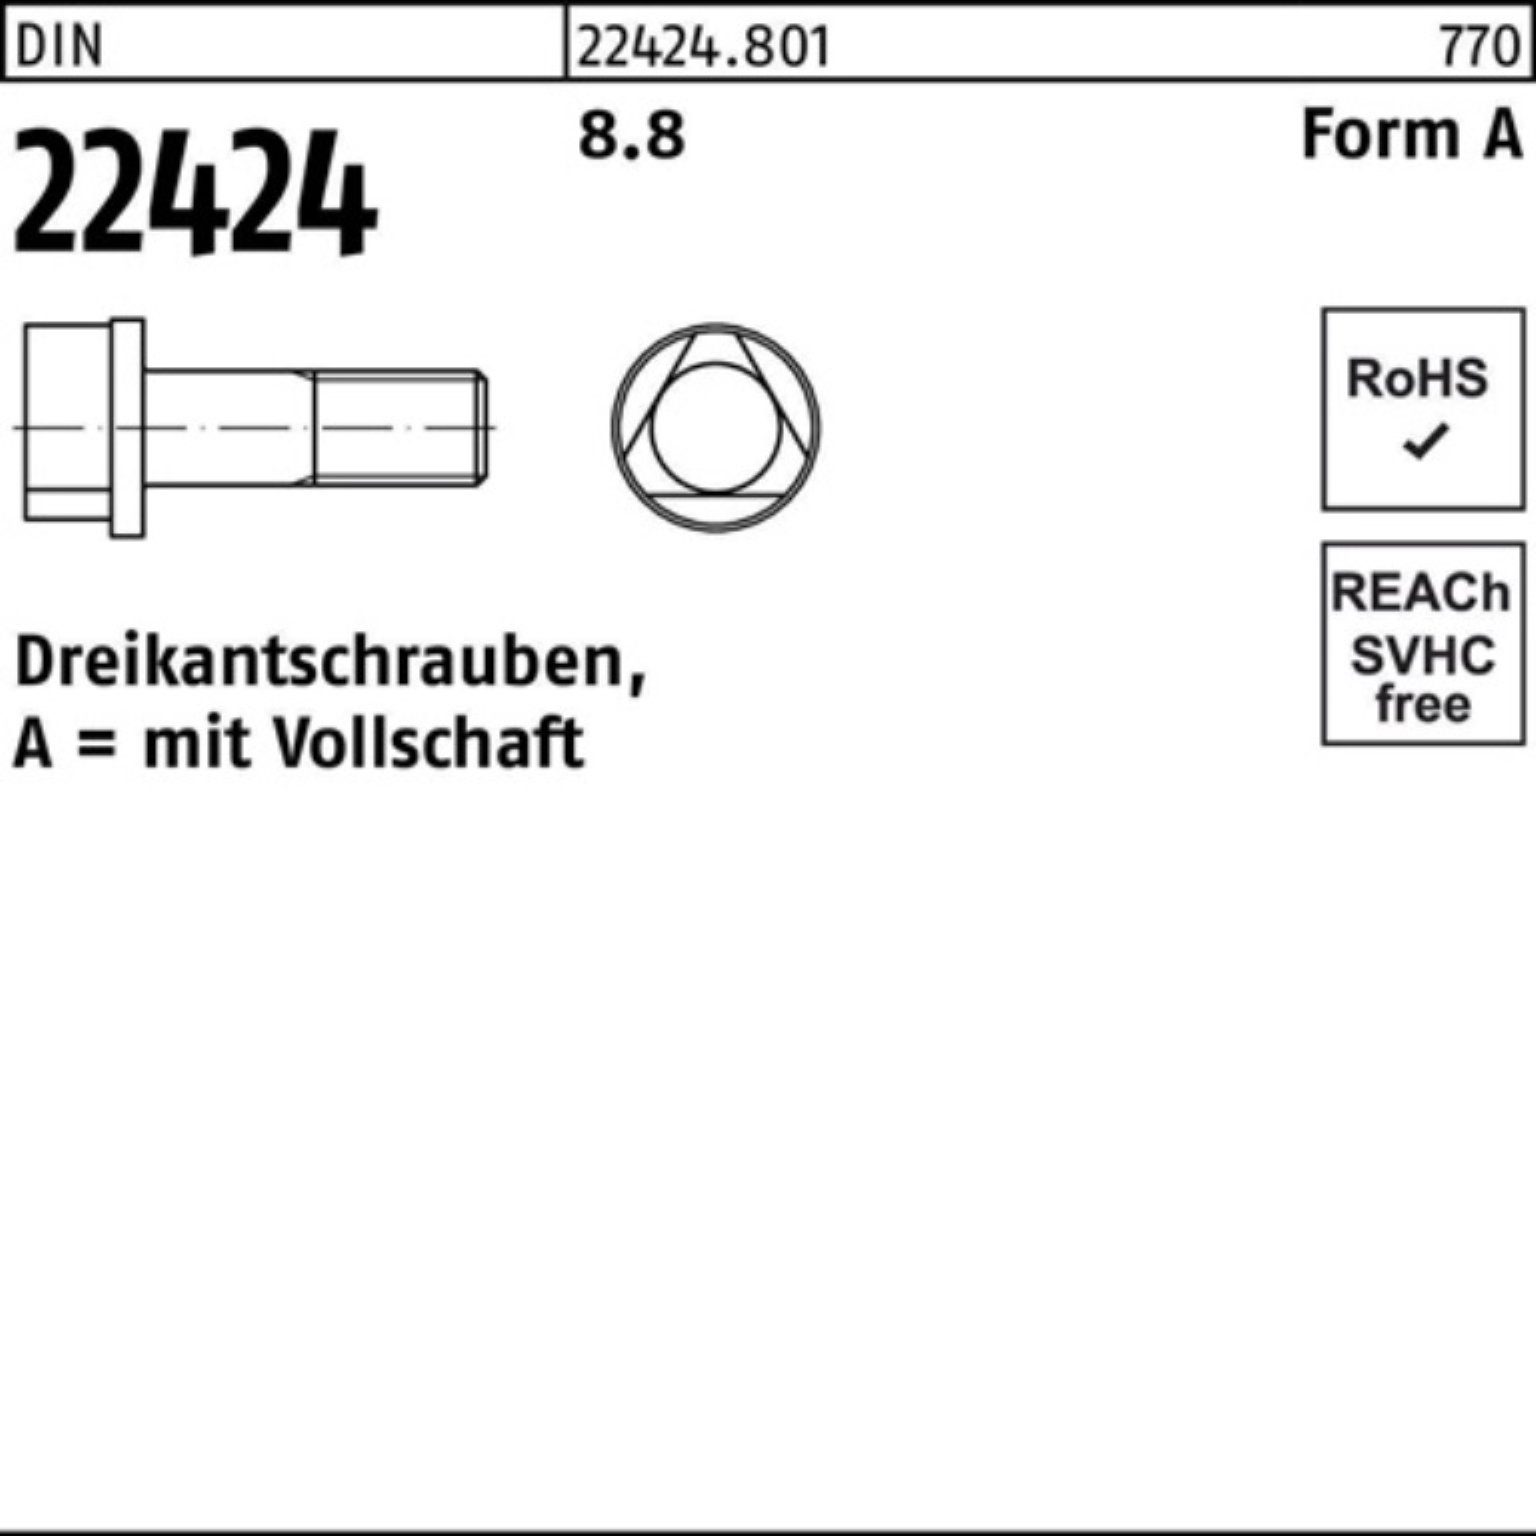 Reyher Schraube 100er Pack Dreikantschraube 8x 22424 DIN Stück 30 DI FormA 8.8 AM 100